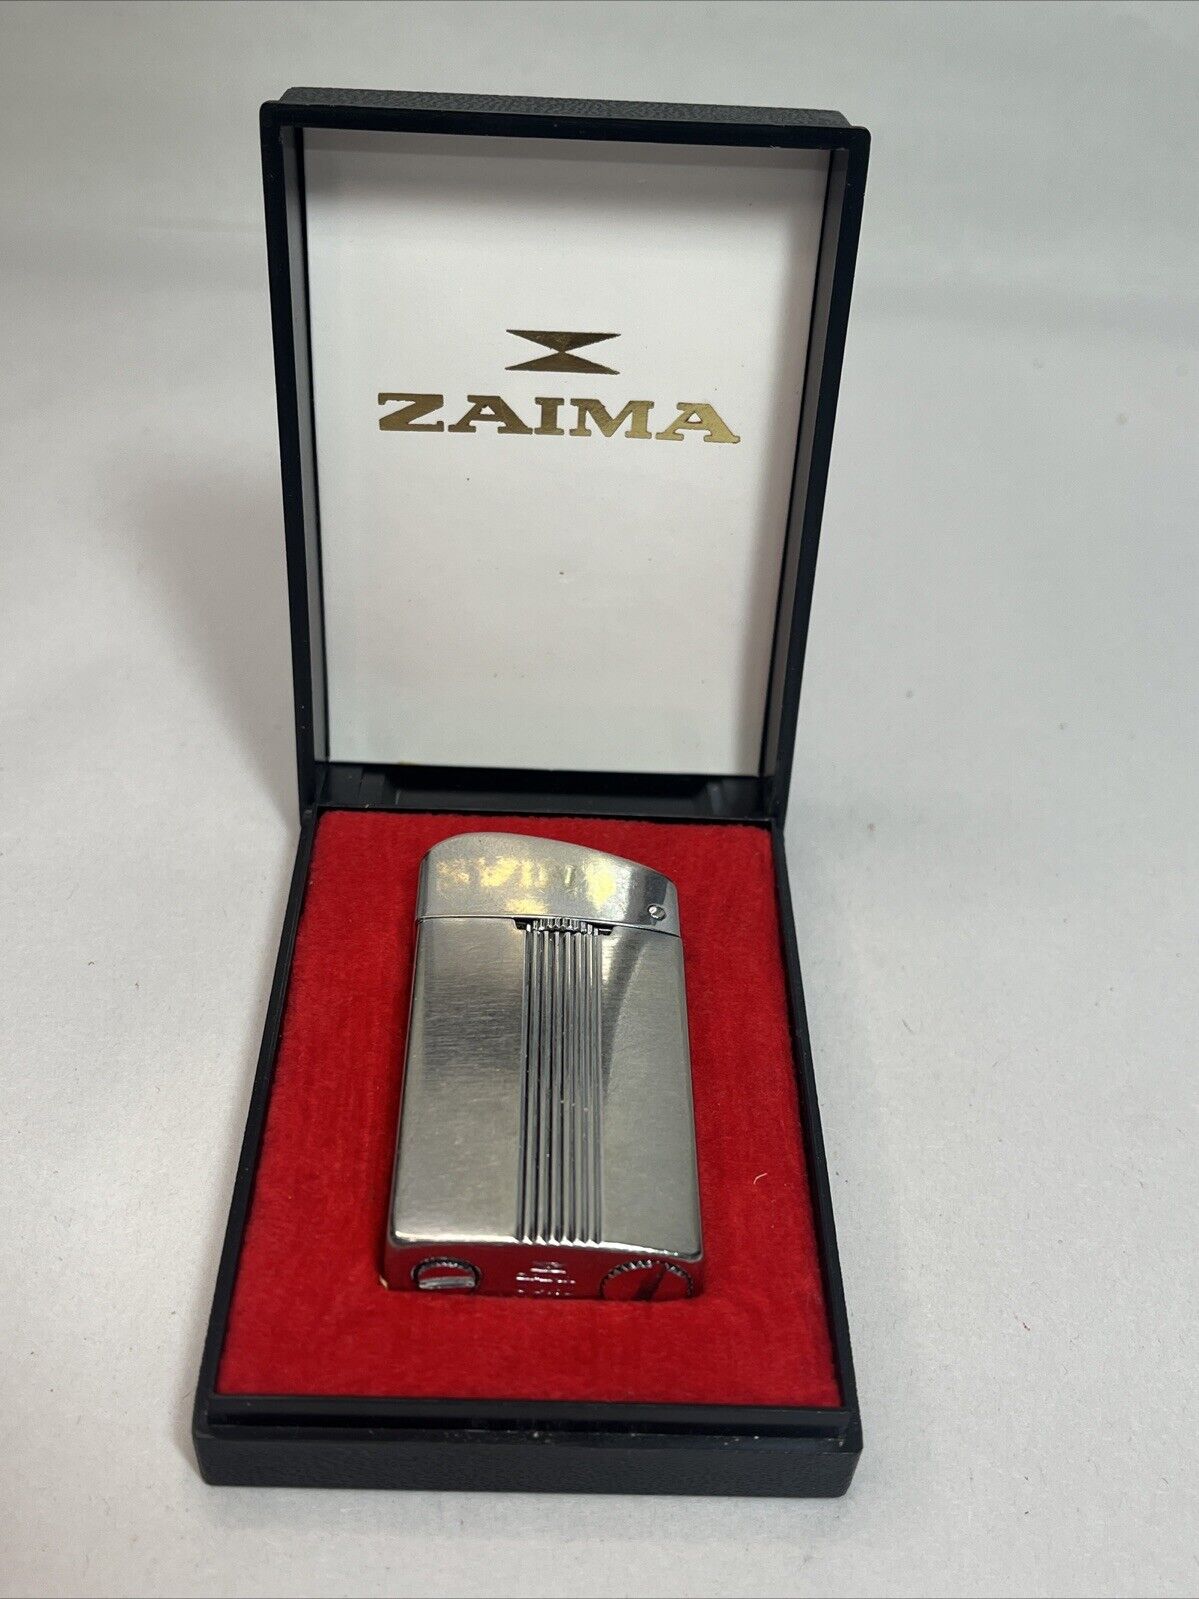 Vintage ZAIMA Cord Slim Cigarette Lighter in Original Box Made in Japan Sparks